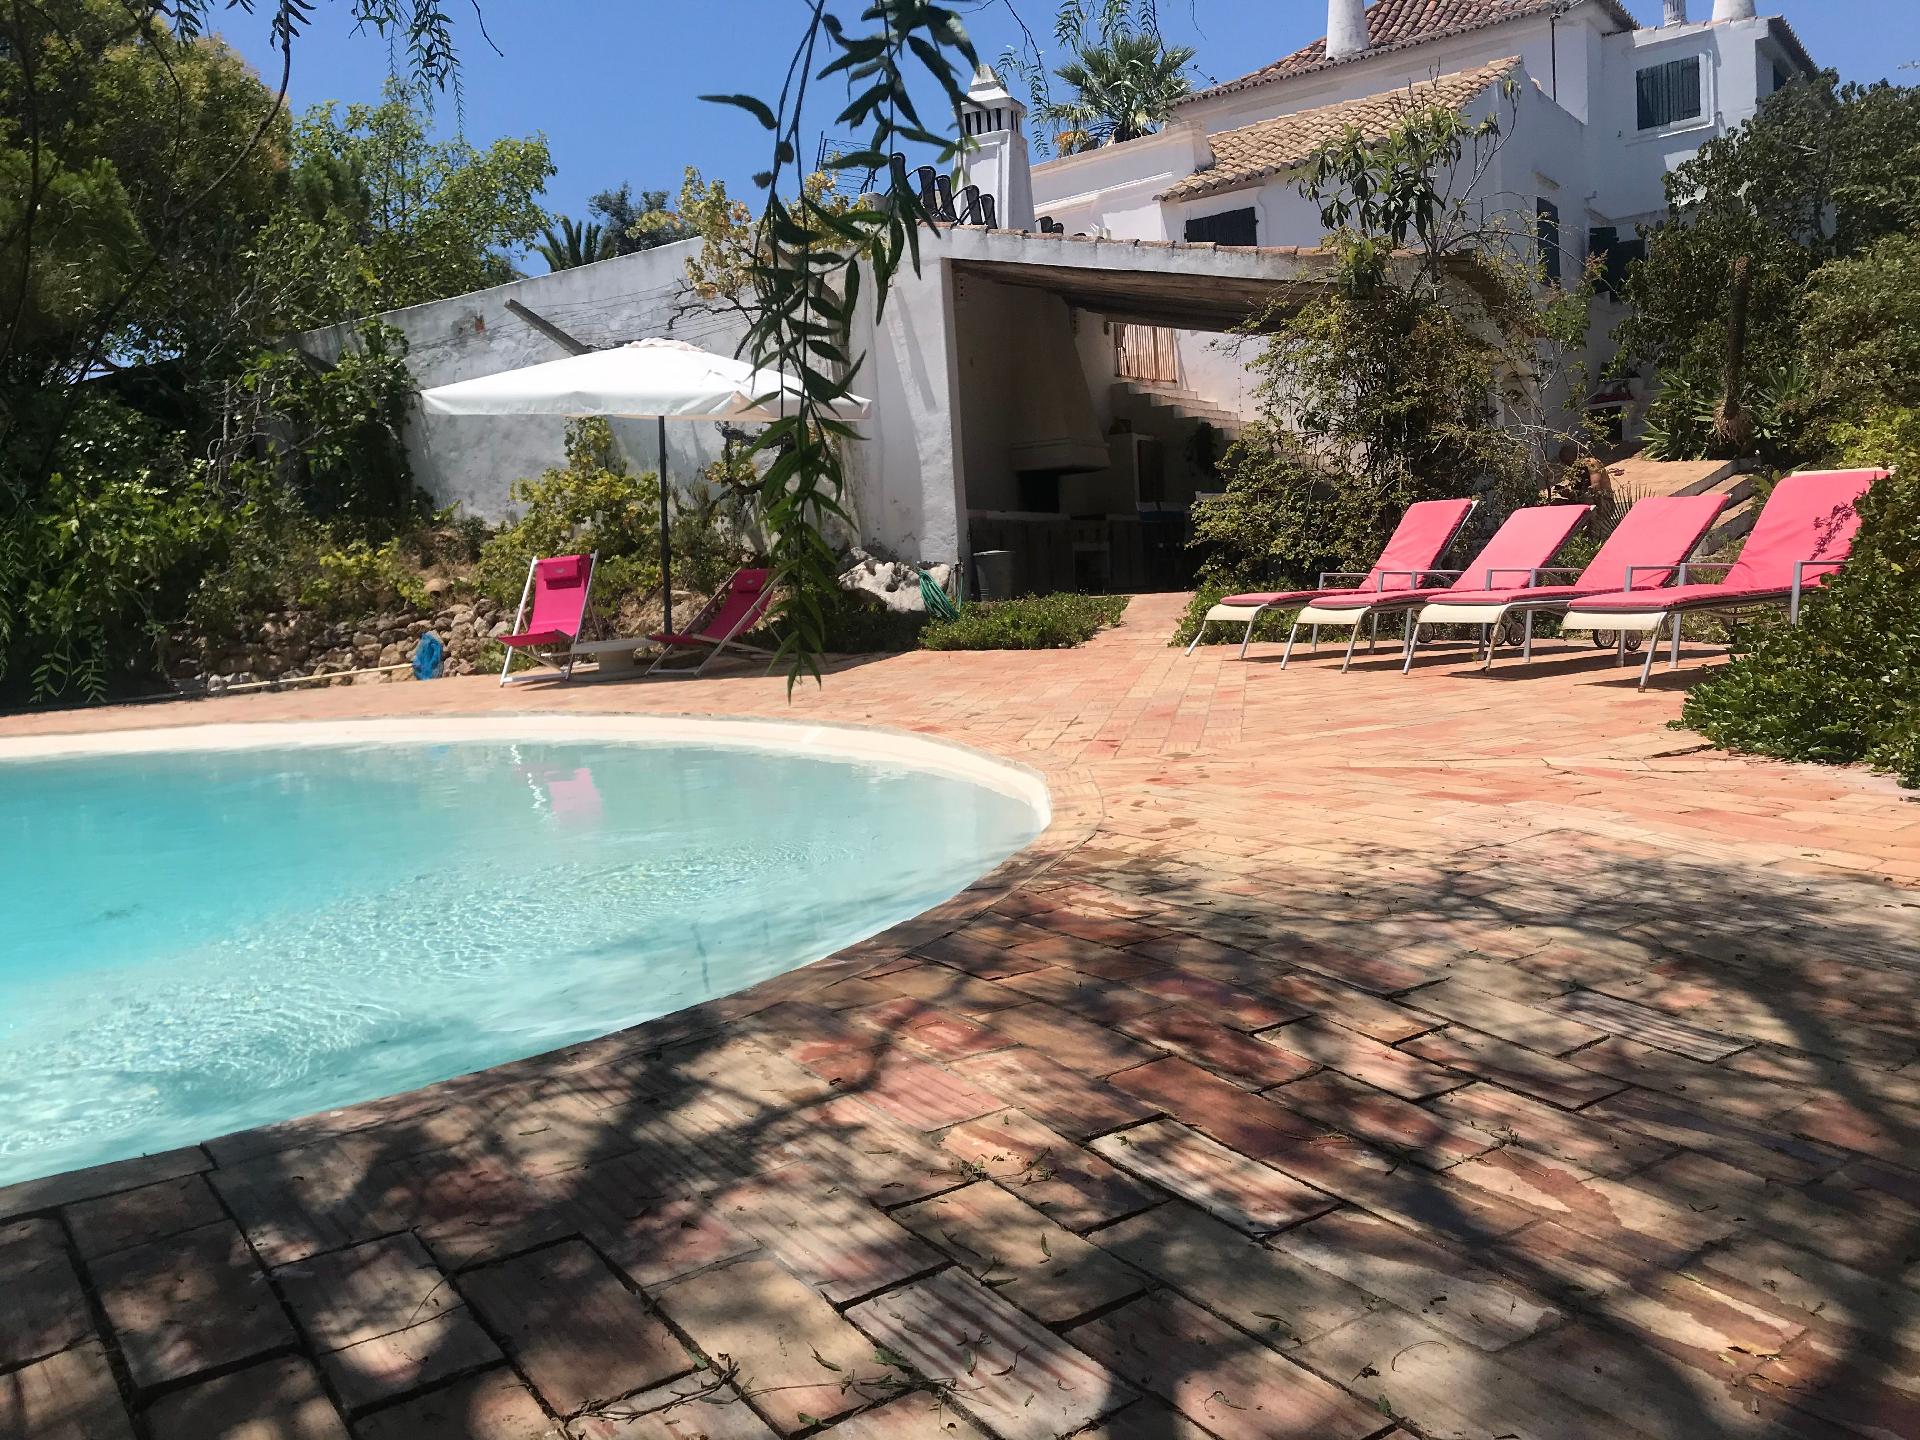 Ferienhaus für 8 Personen in Alvor, Algarve ( Ferienhaus in Portugal